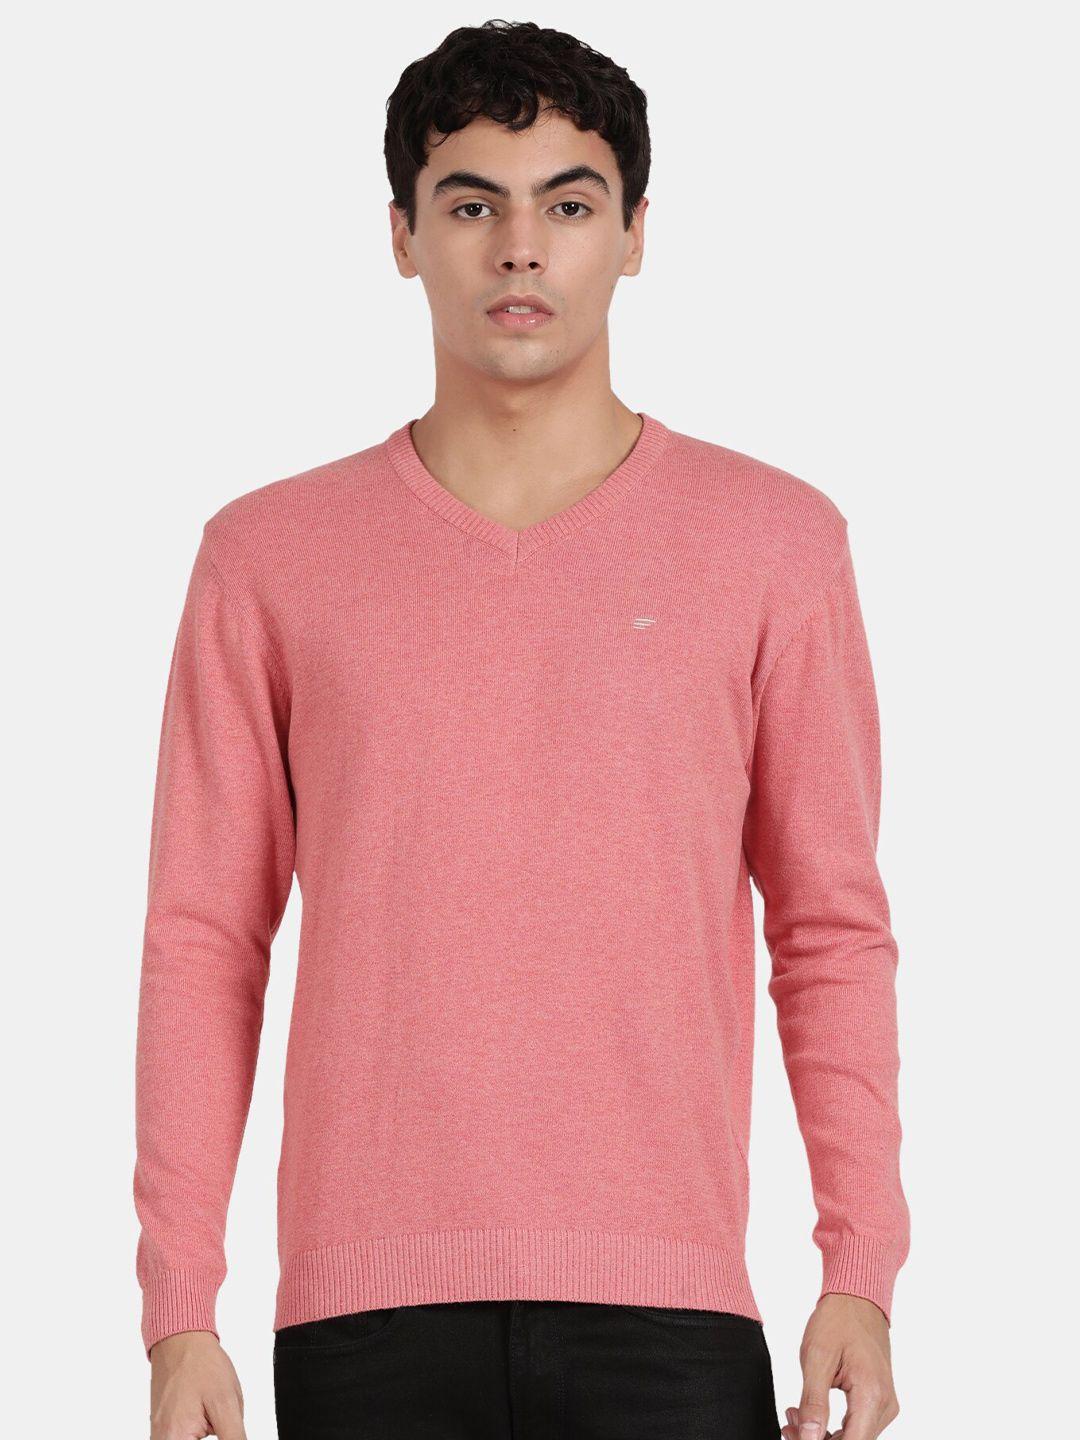 t-base v-neck cotton pullover sweatshirt